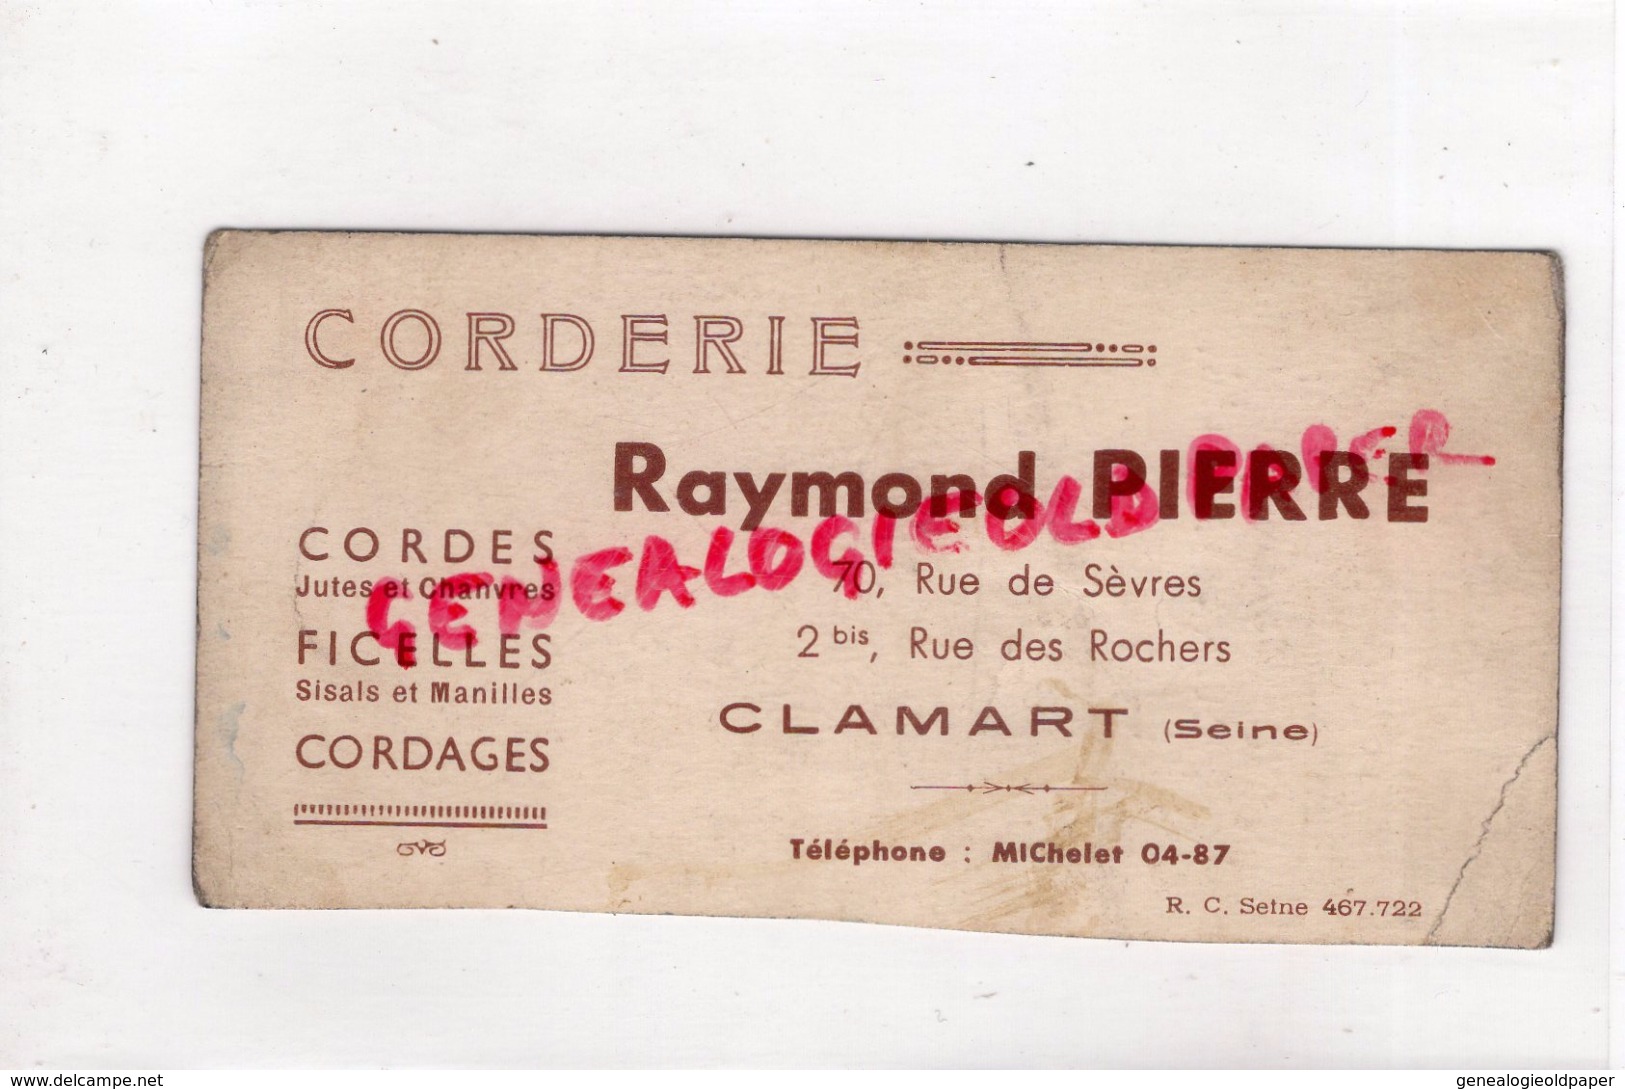 92 - CLAMART - CARTE CORDERIE RAYMOND PIERRE -70 RUE DE SEVRES-2BIS RUE ROCHERS- JUTE CHANVRE FICELLE - 1950 - ...